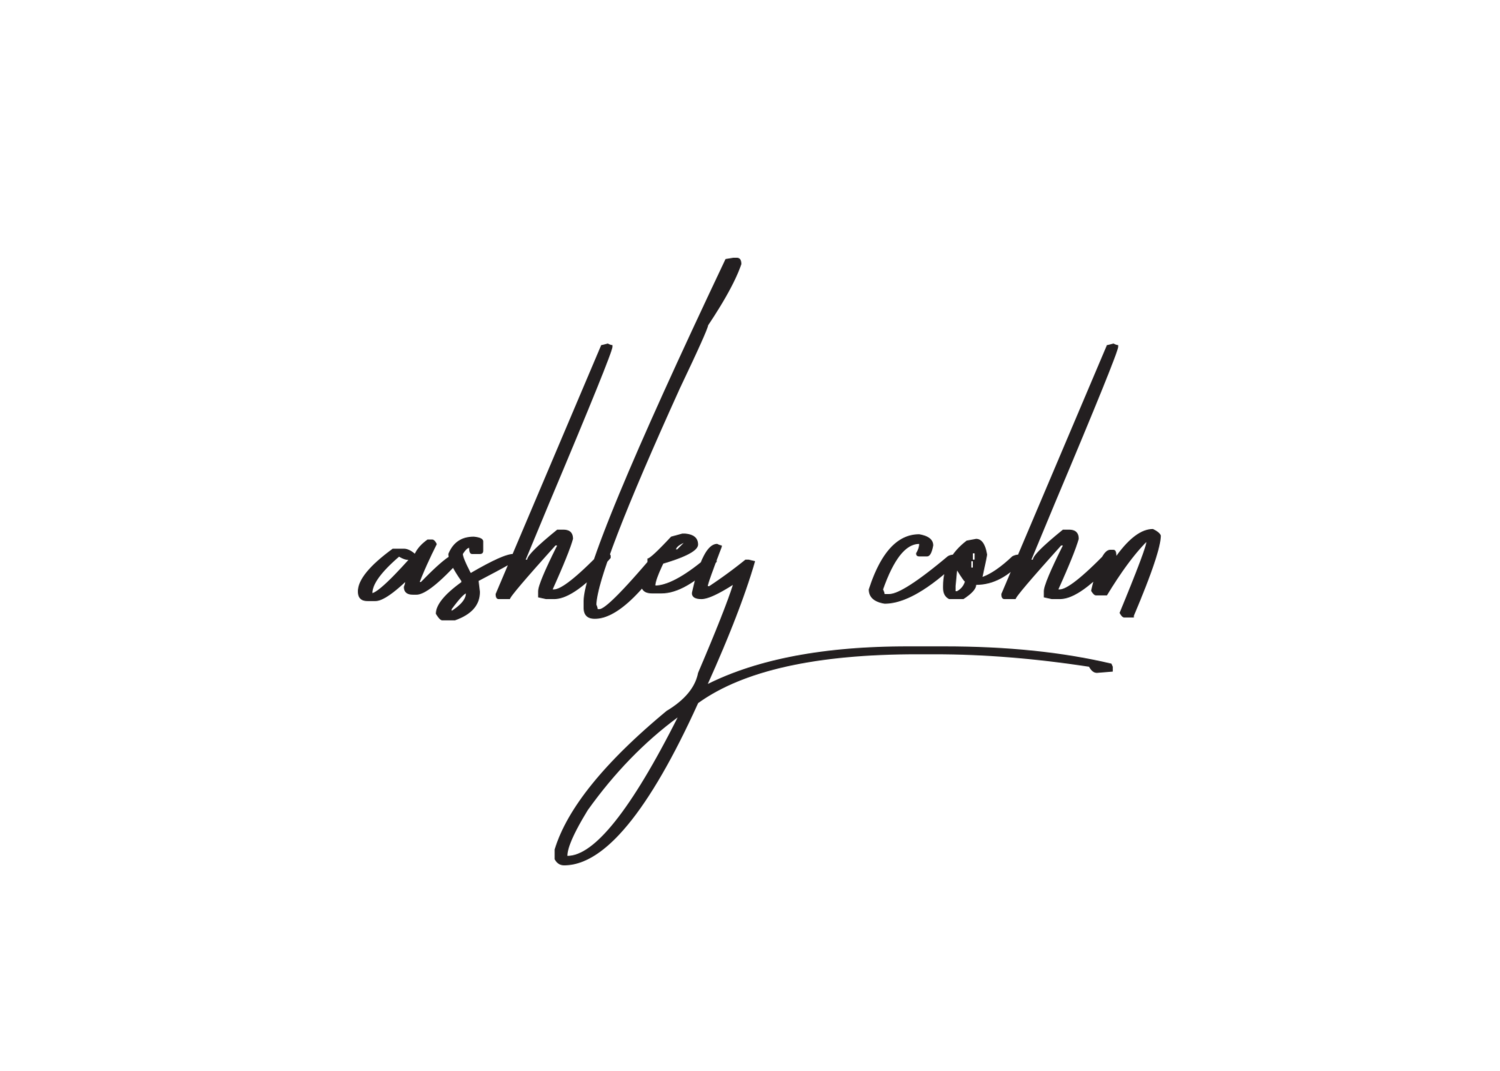 Ashley Cohn's Signature